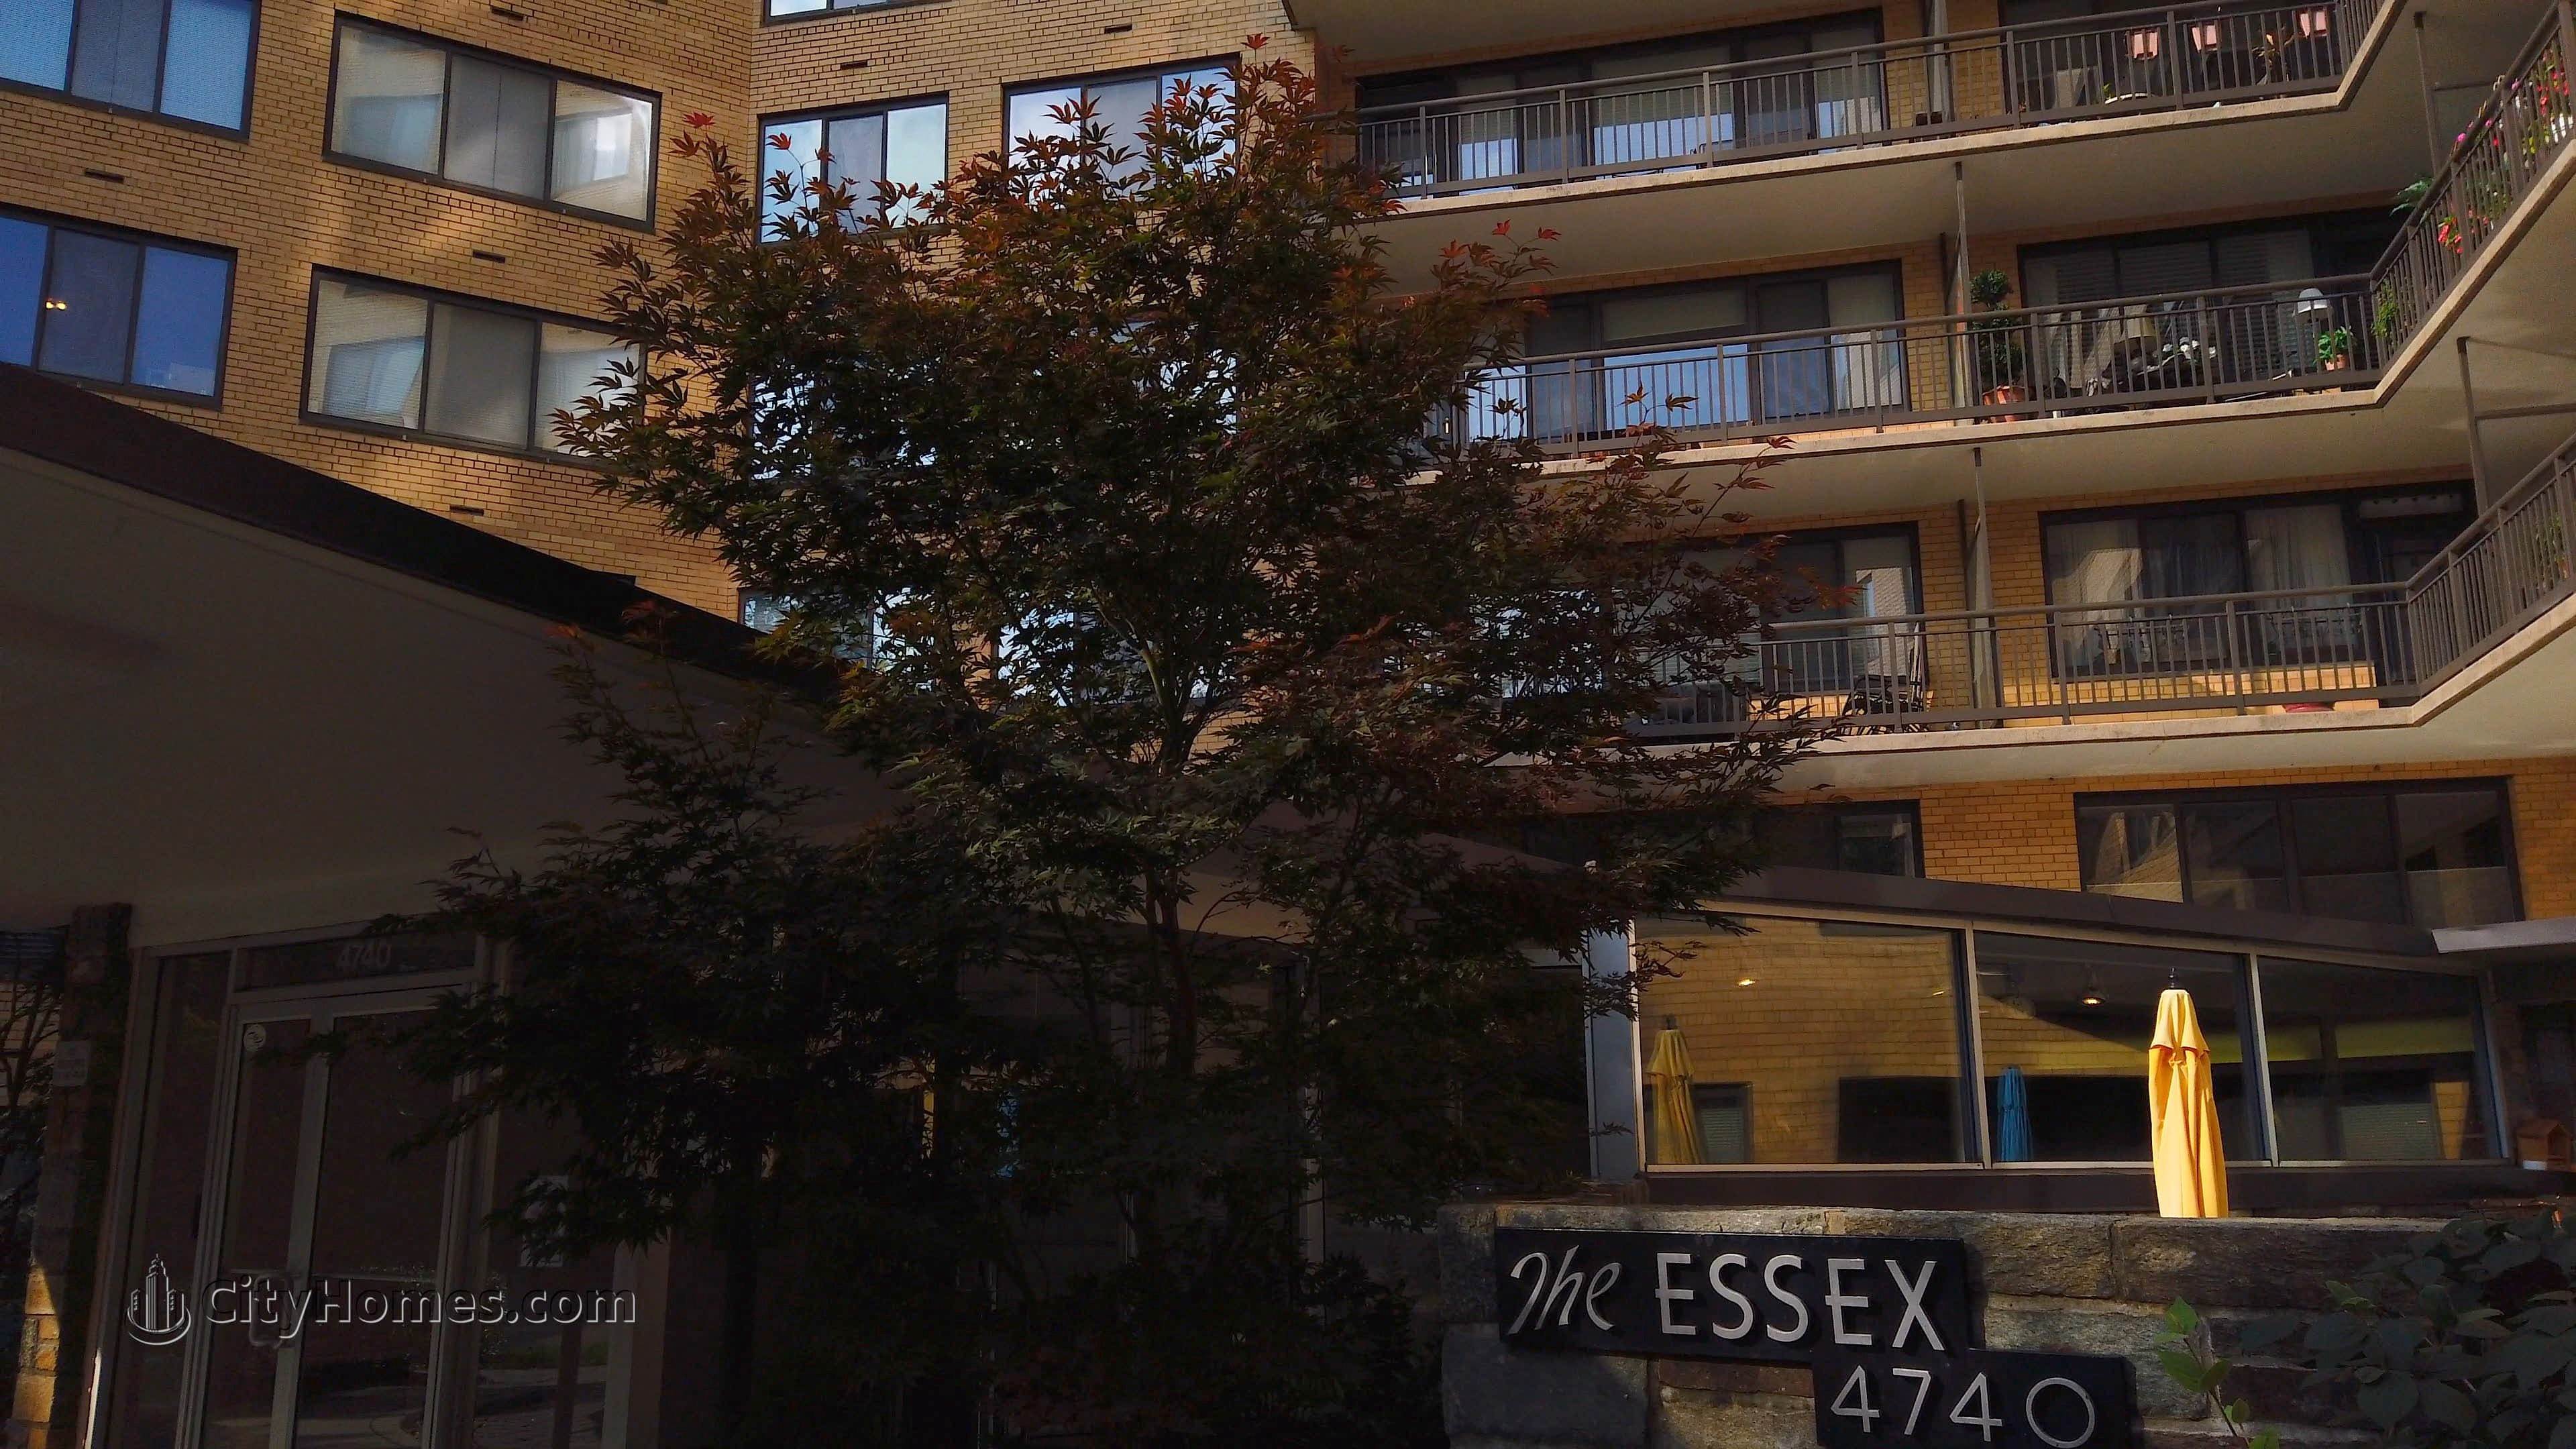 The Essex здание в 4740 Connecticut Ave NW, Wakefield, Washington, DC 20008